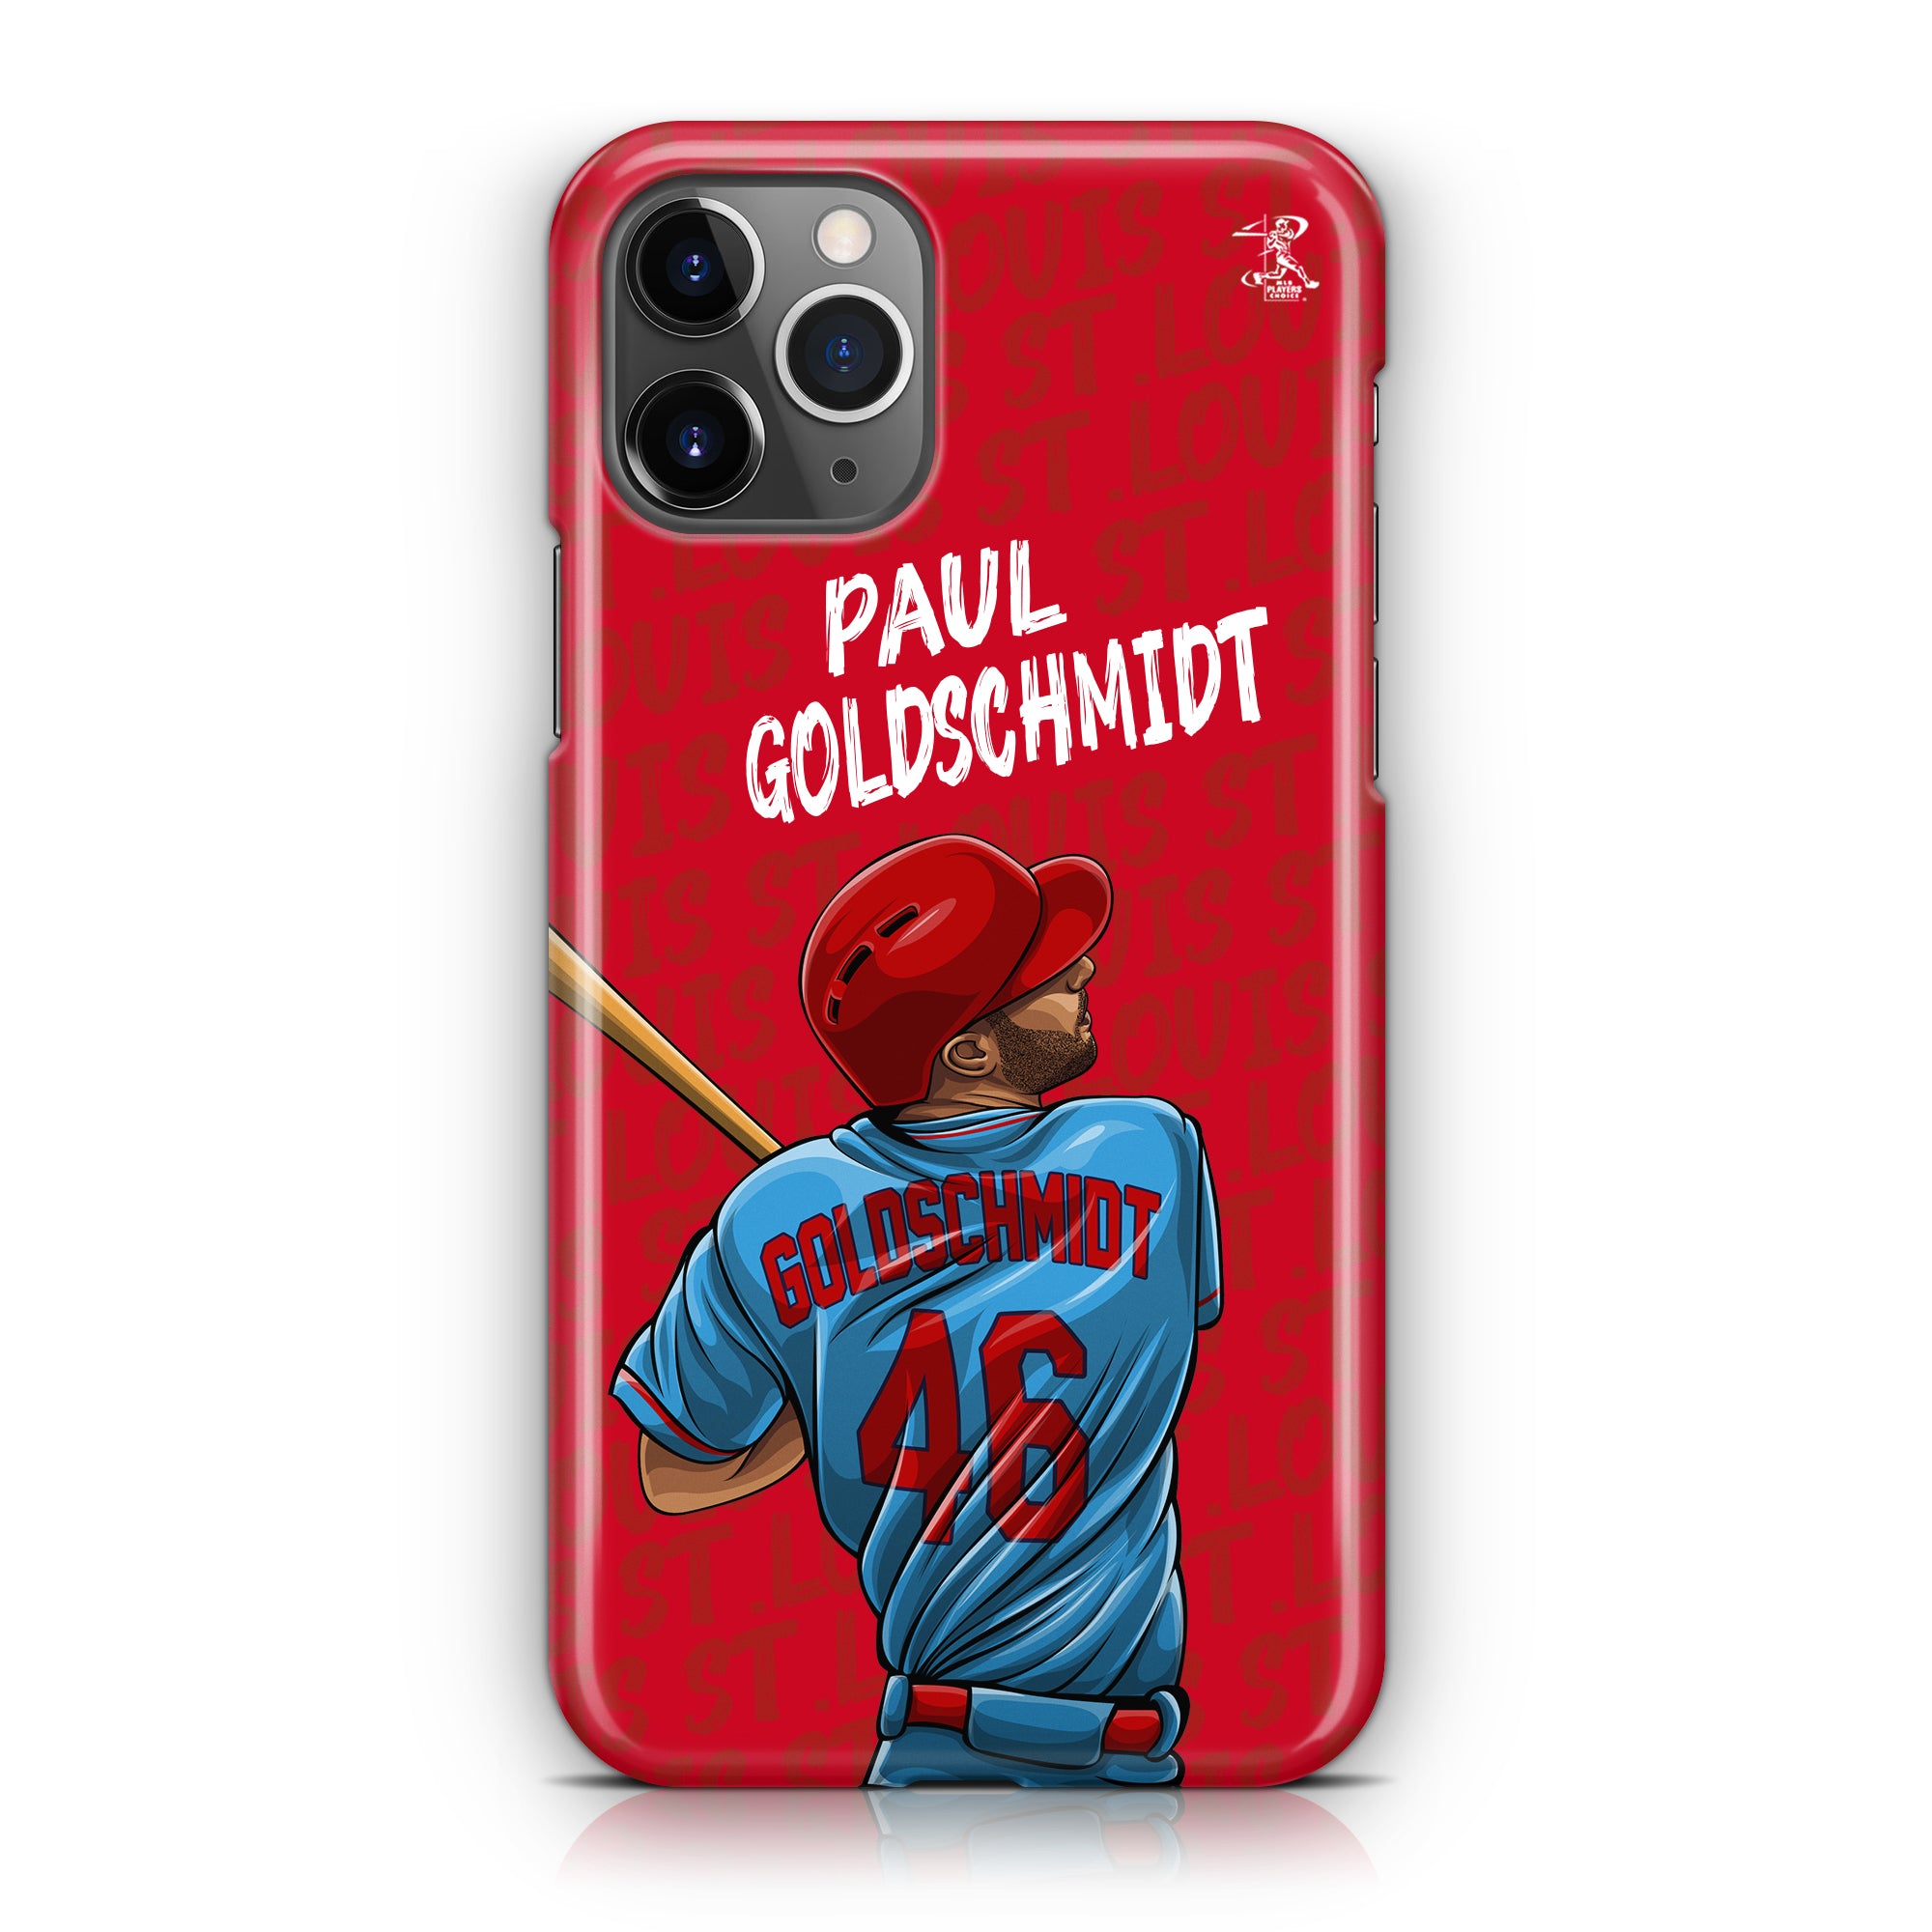 Goldschmidt Star Series 2.0 Case